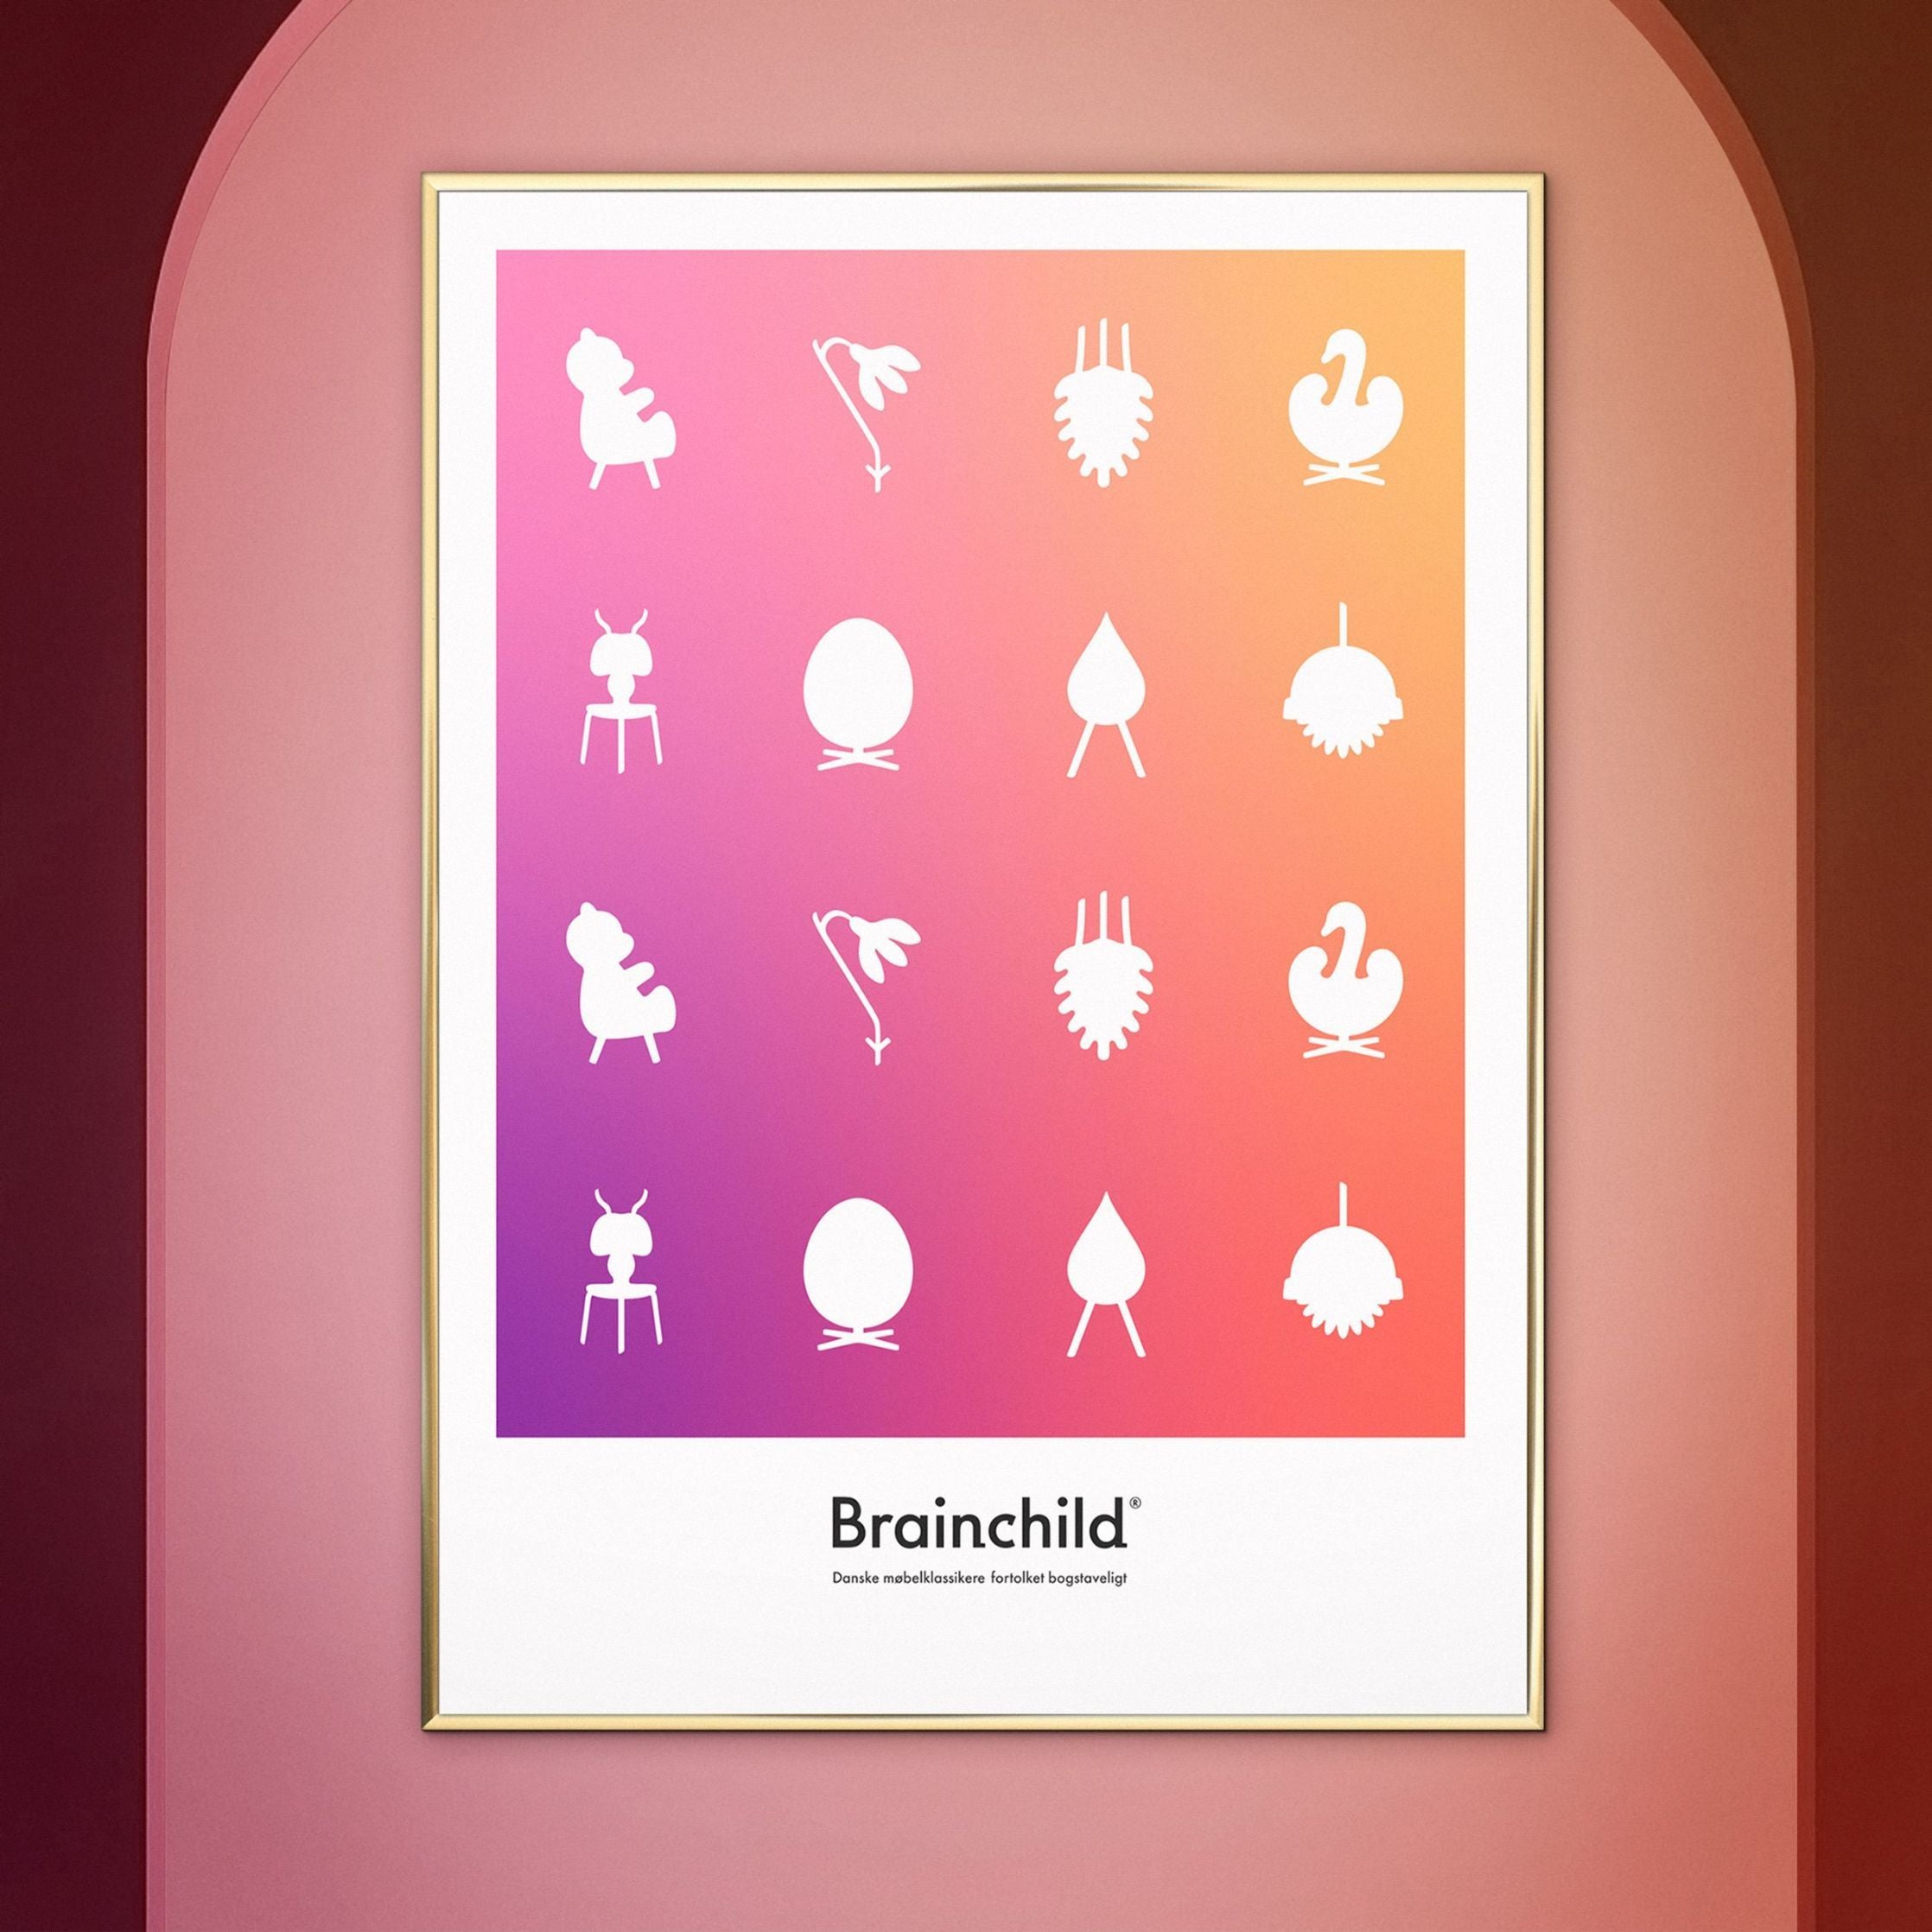 Brainchild Design Icon Poster, Frame Made Of Light Wood 50x70 Cm, Colour